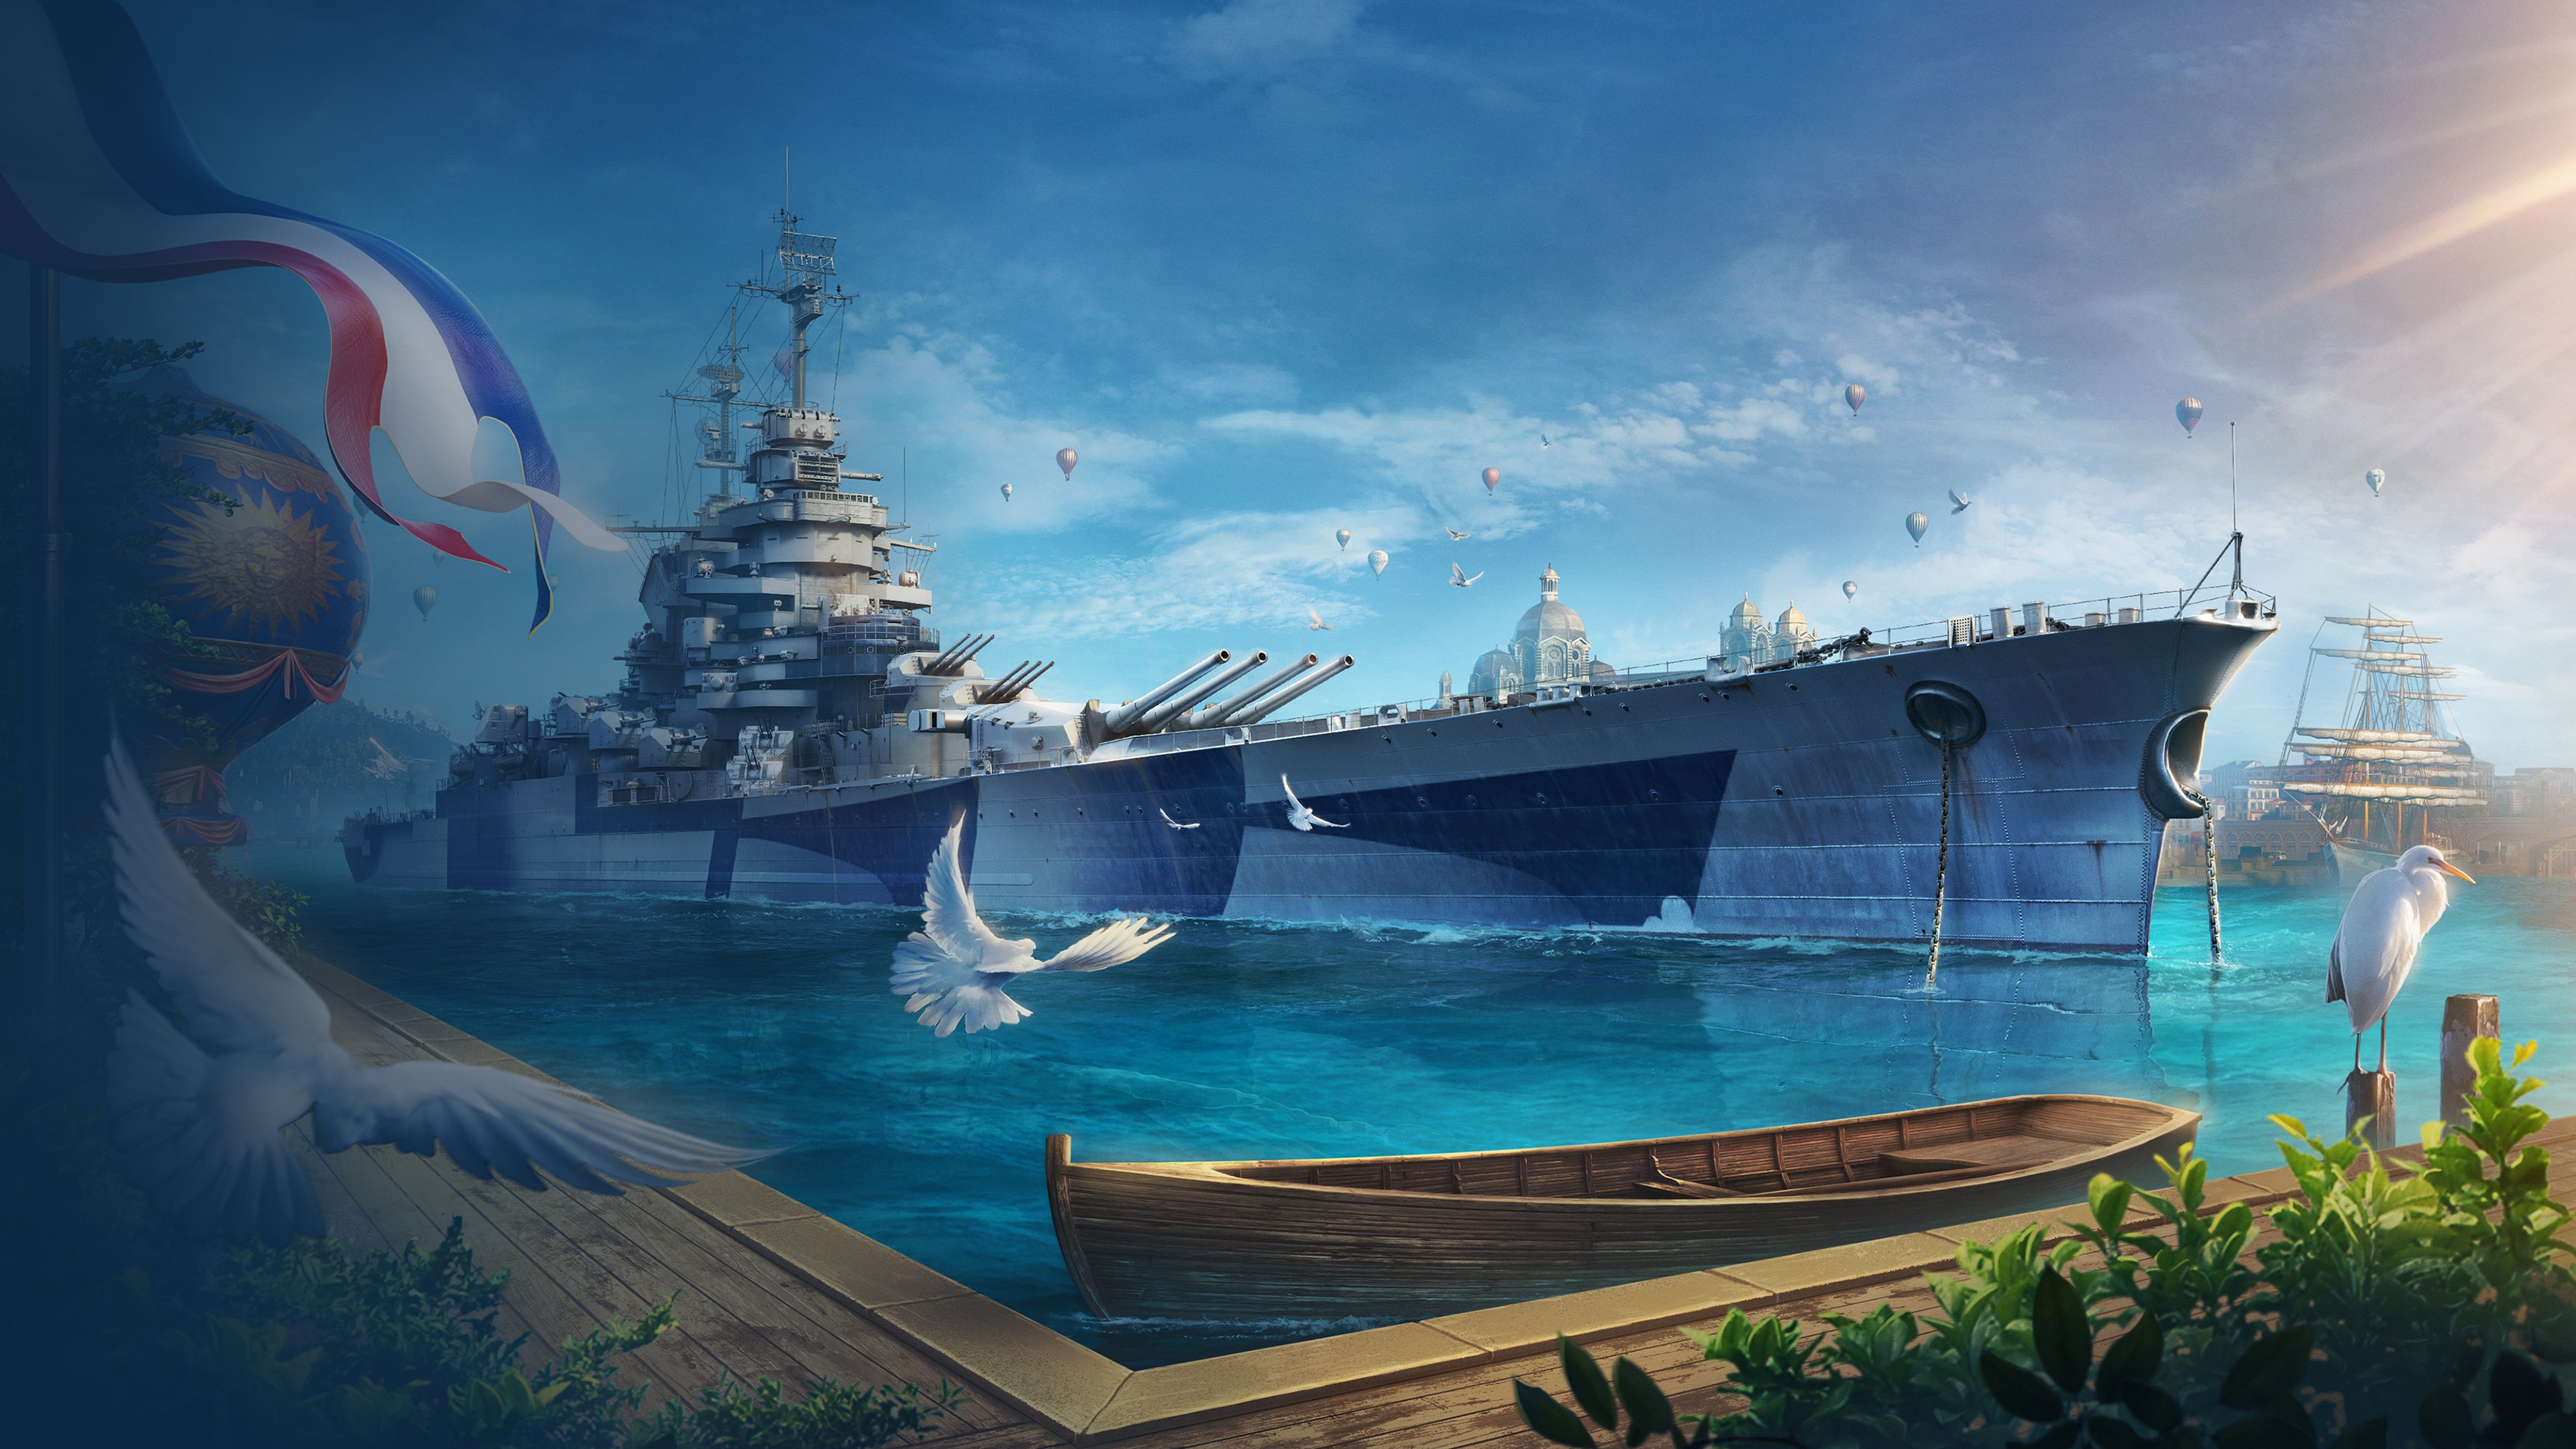 World of Warships: Legends (English/Japanese Ver.)